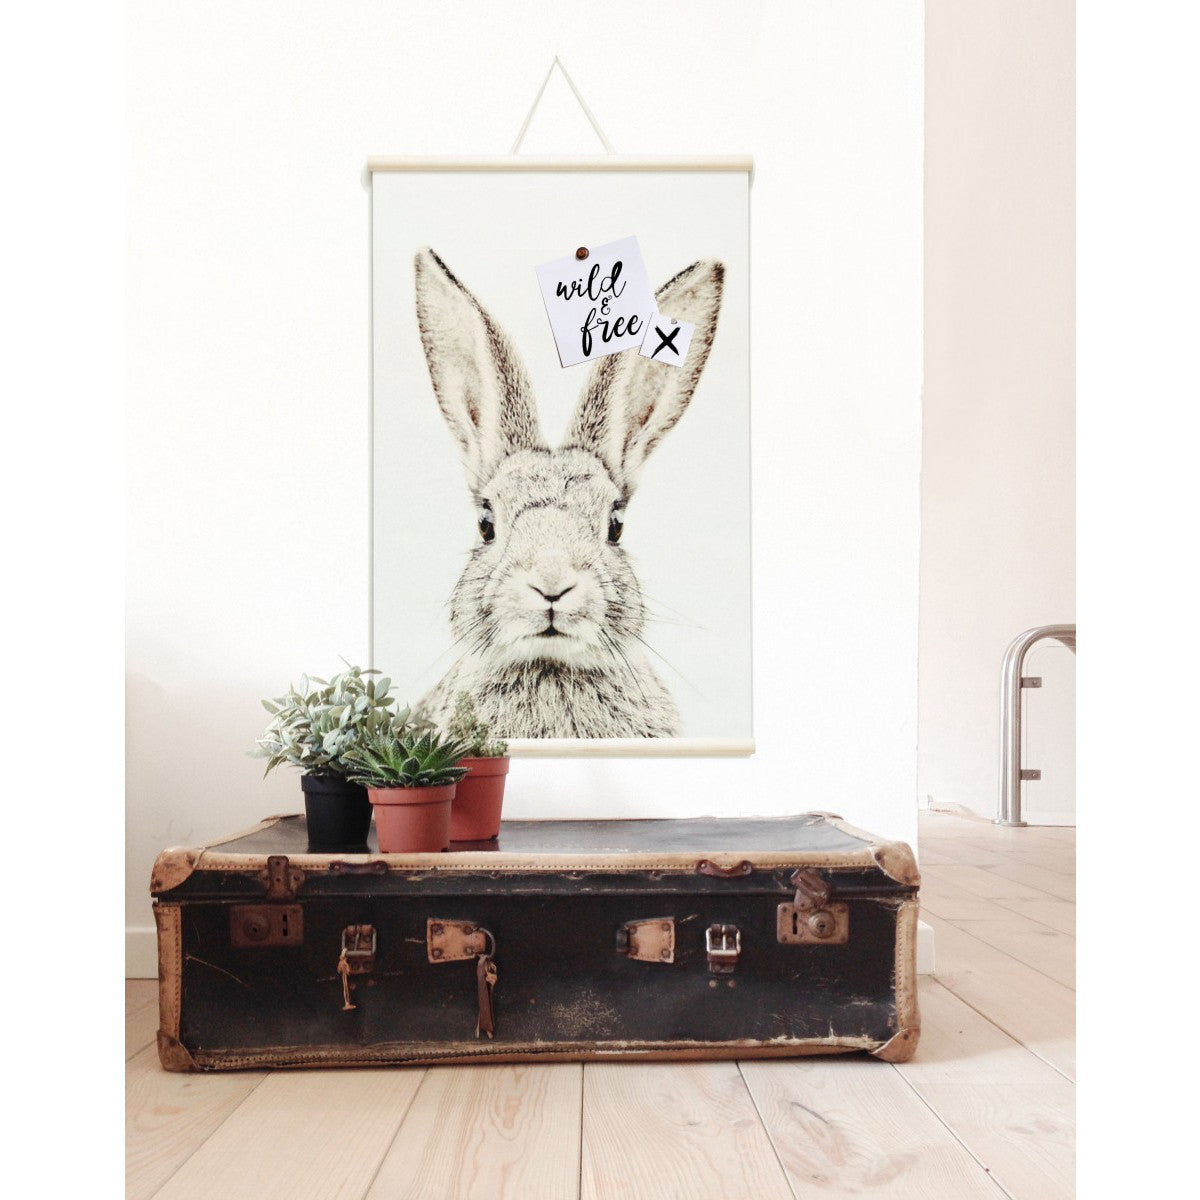 deerindustries wall decoration for kids bedroom, nursery or playroom. Magnetic poster of bunny rabbit made in Europe. Belgium design.